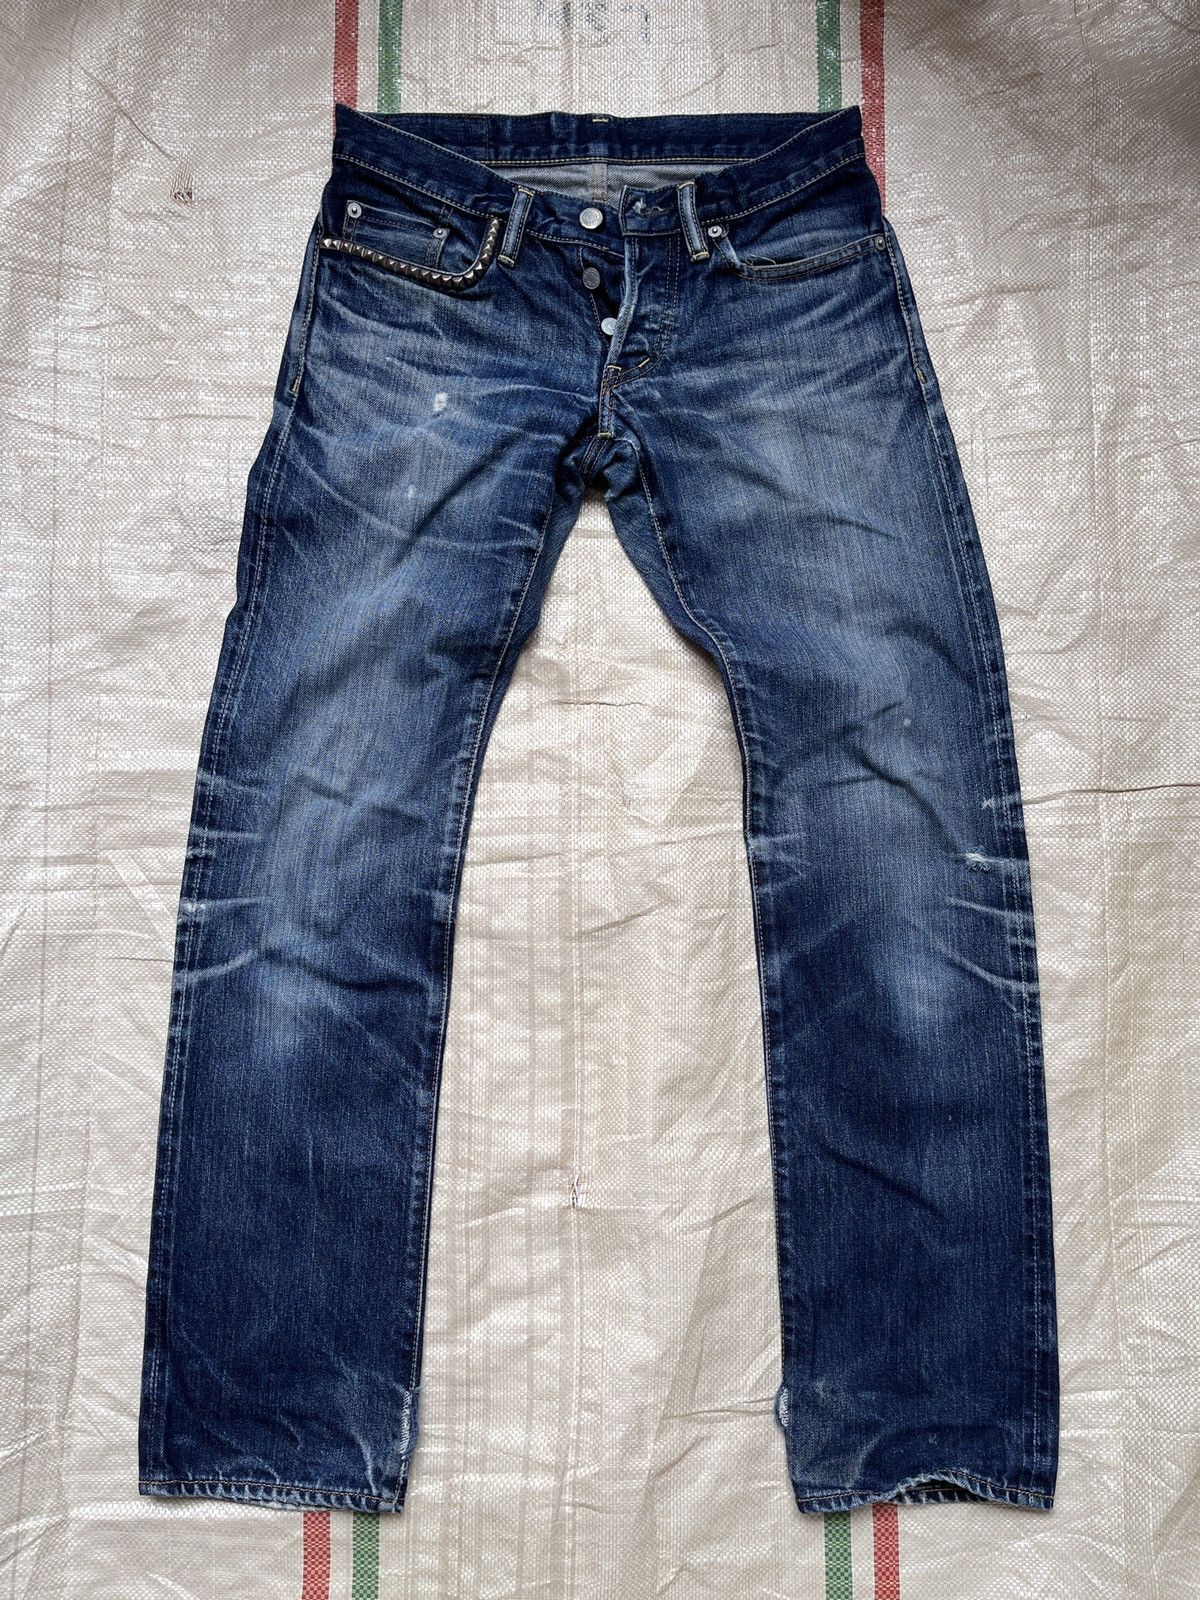 Vintage - Redline Selvedge Hystoric Glamour Denim Jeans Distressed - 23